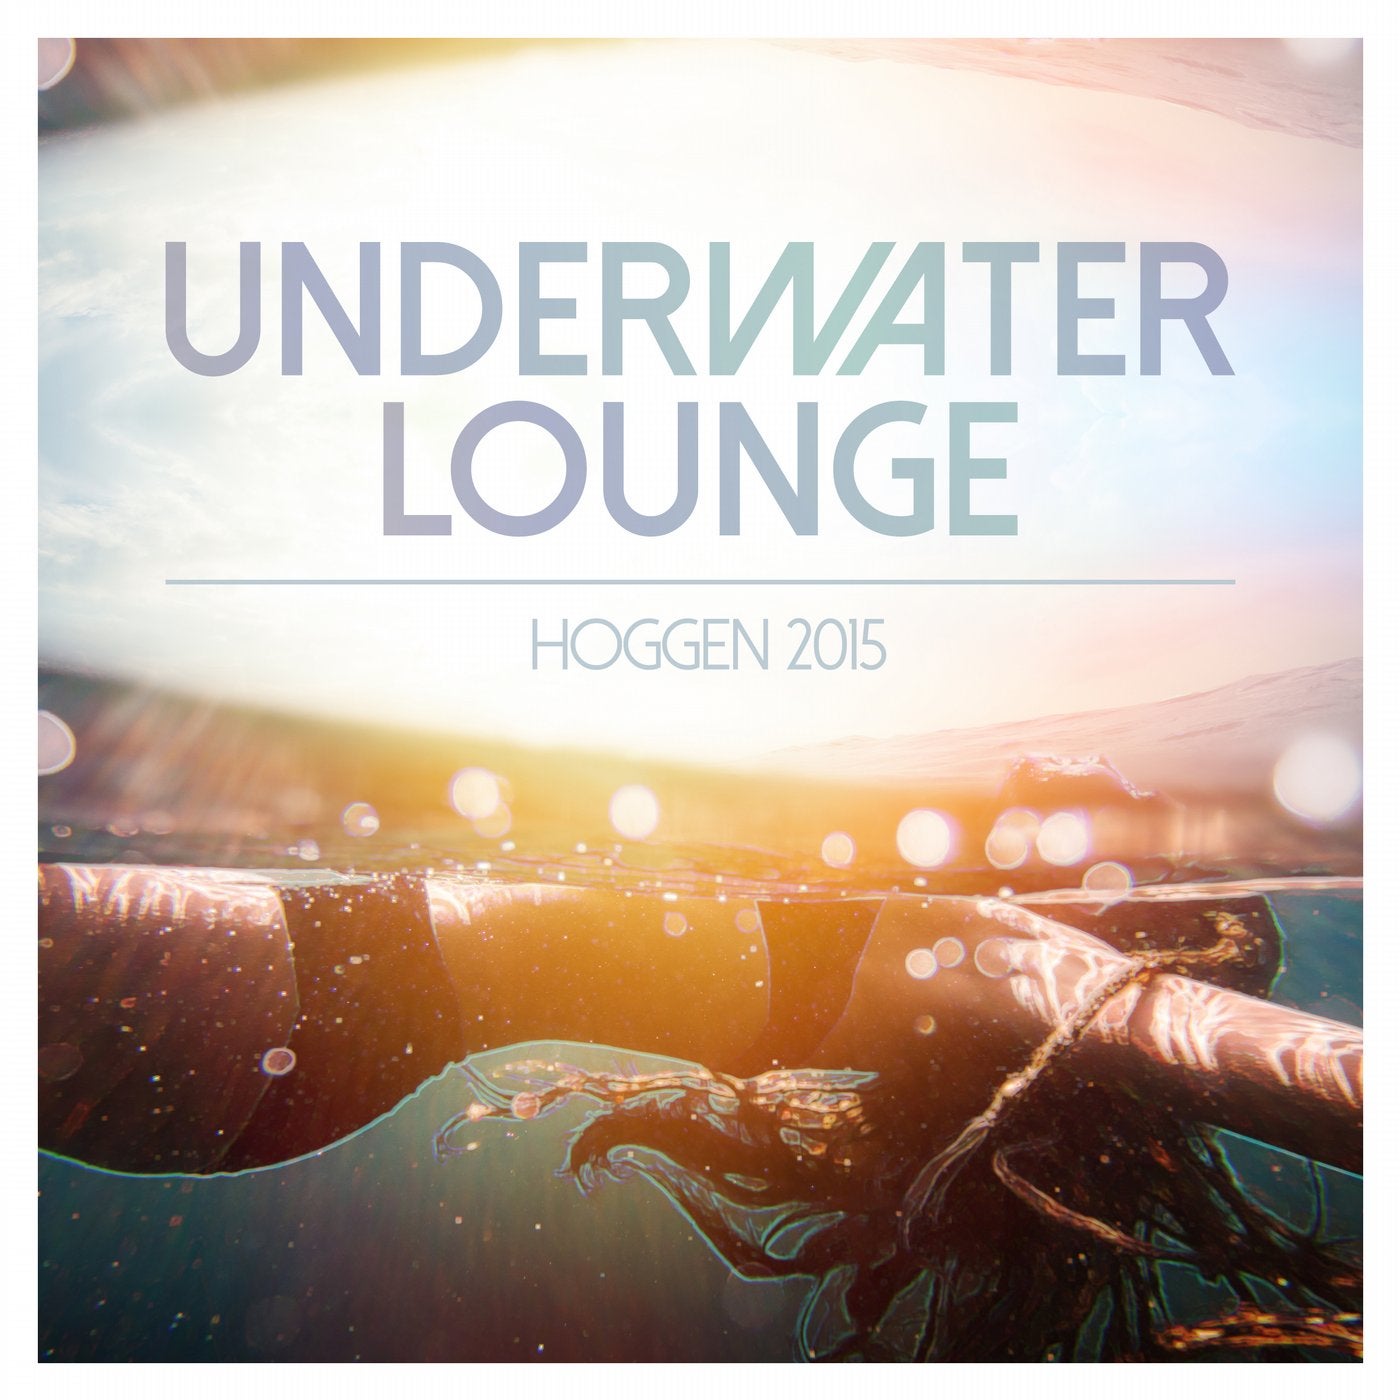 Underwater Lounge - Hoggen 2015